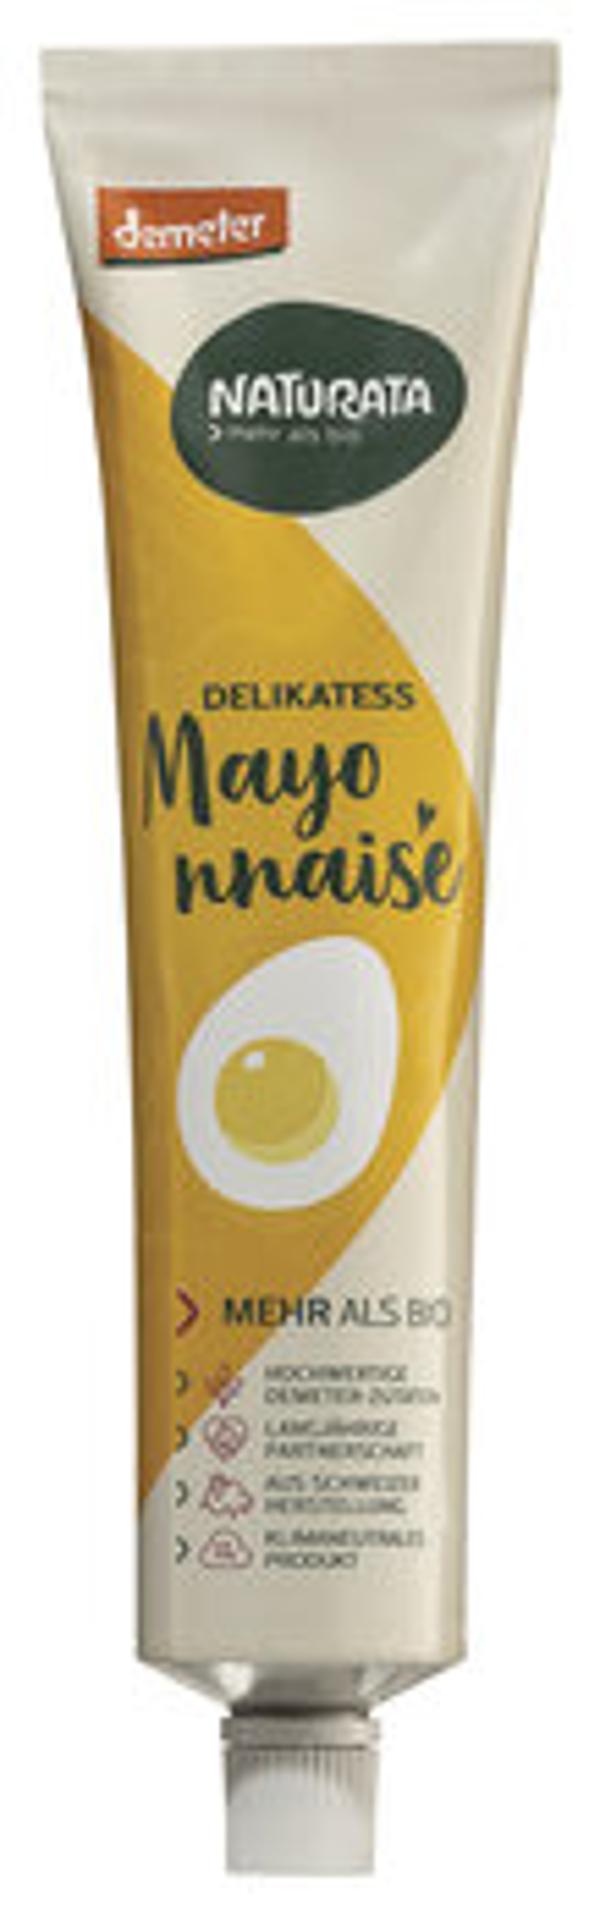 Produktfoto zu Delikatess Mayonnaise Tube